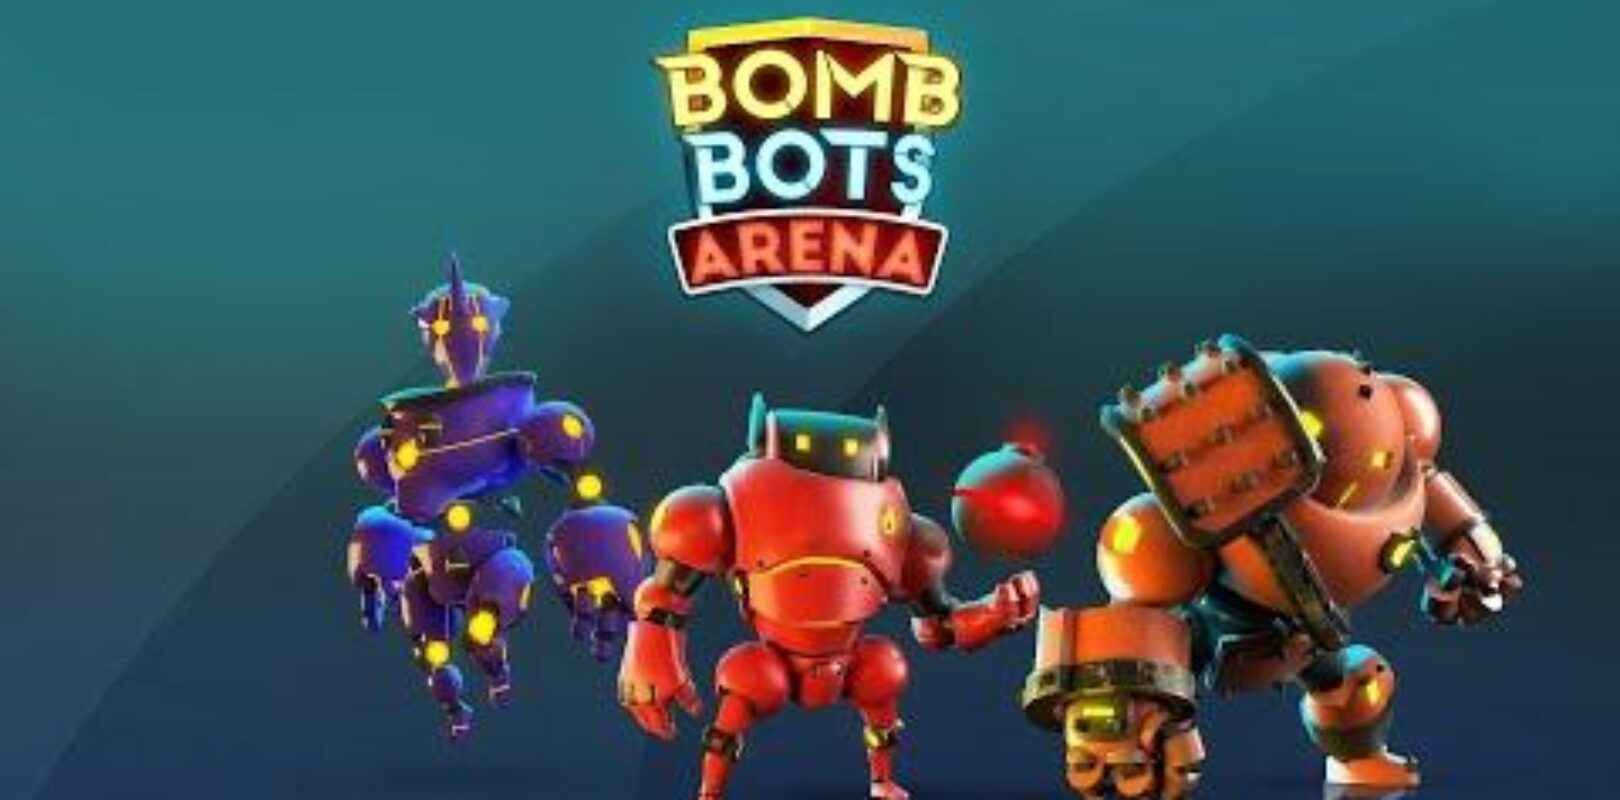 Bomb Bots Arena Exclusive Alienware D Volt Pack Key Giveaway